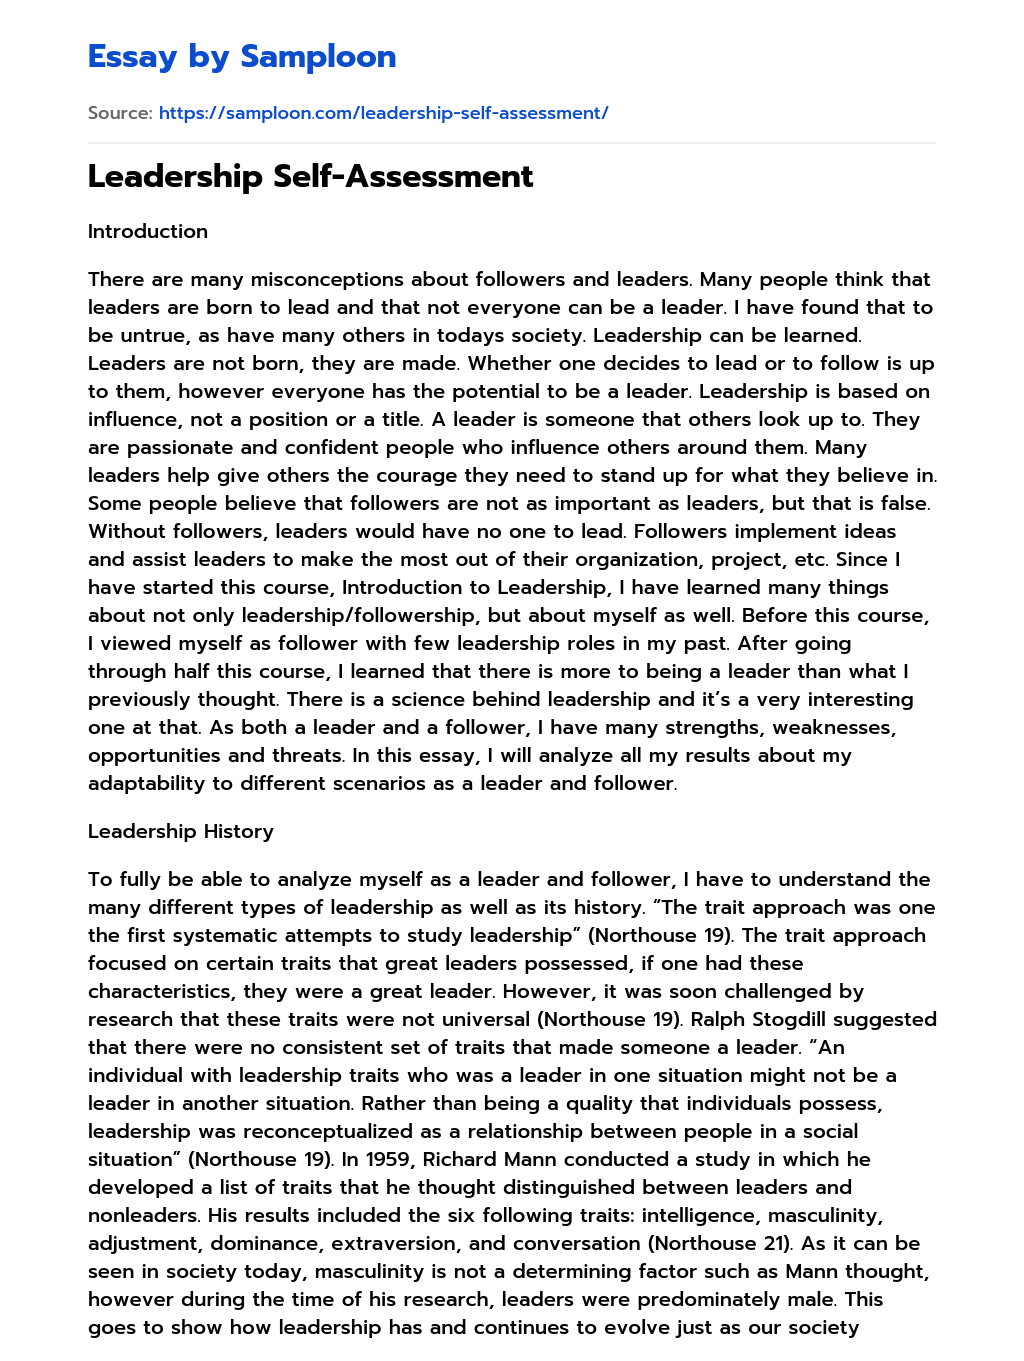 Leadership Self-Assessment essay